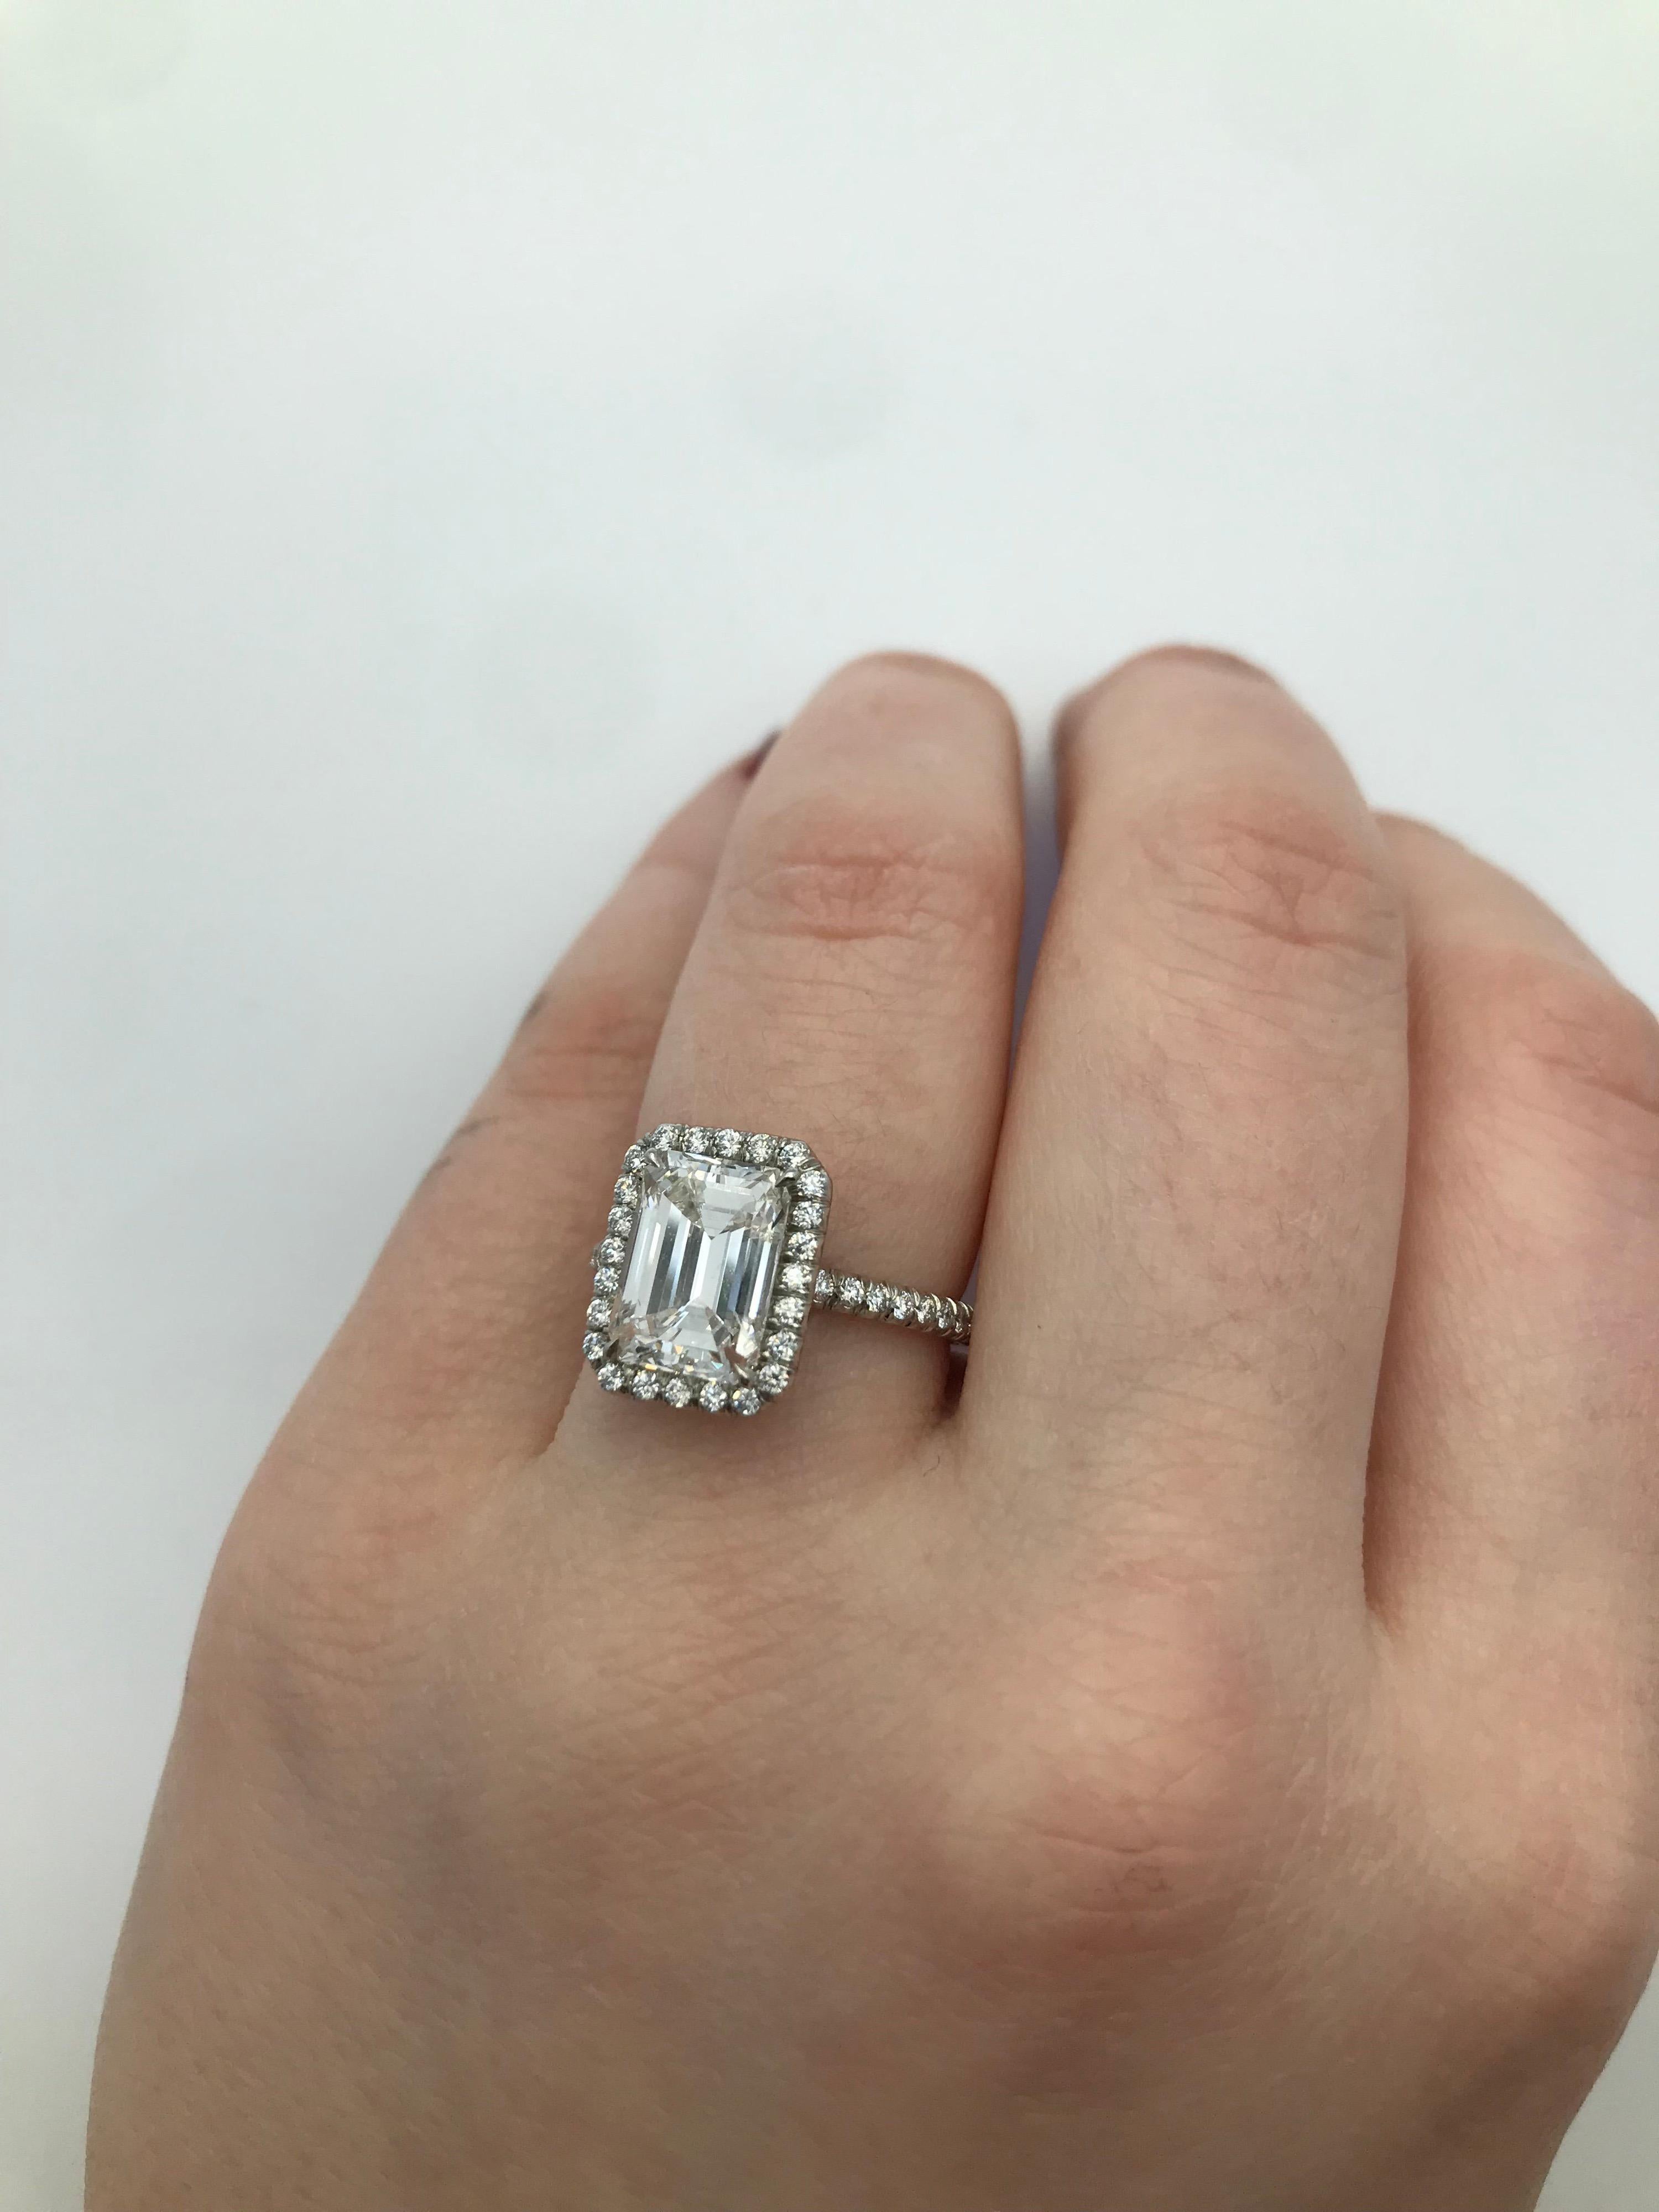 Women's GIA Certified 3.01 Carat Emerald Cut Diamond Engagement Ring